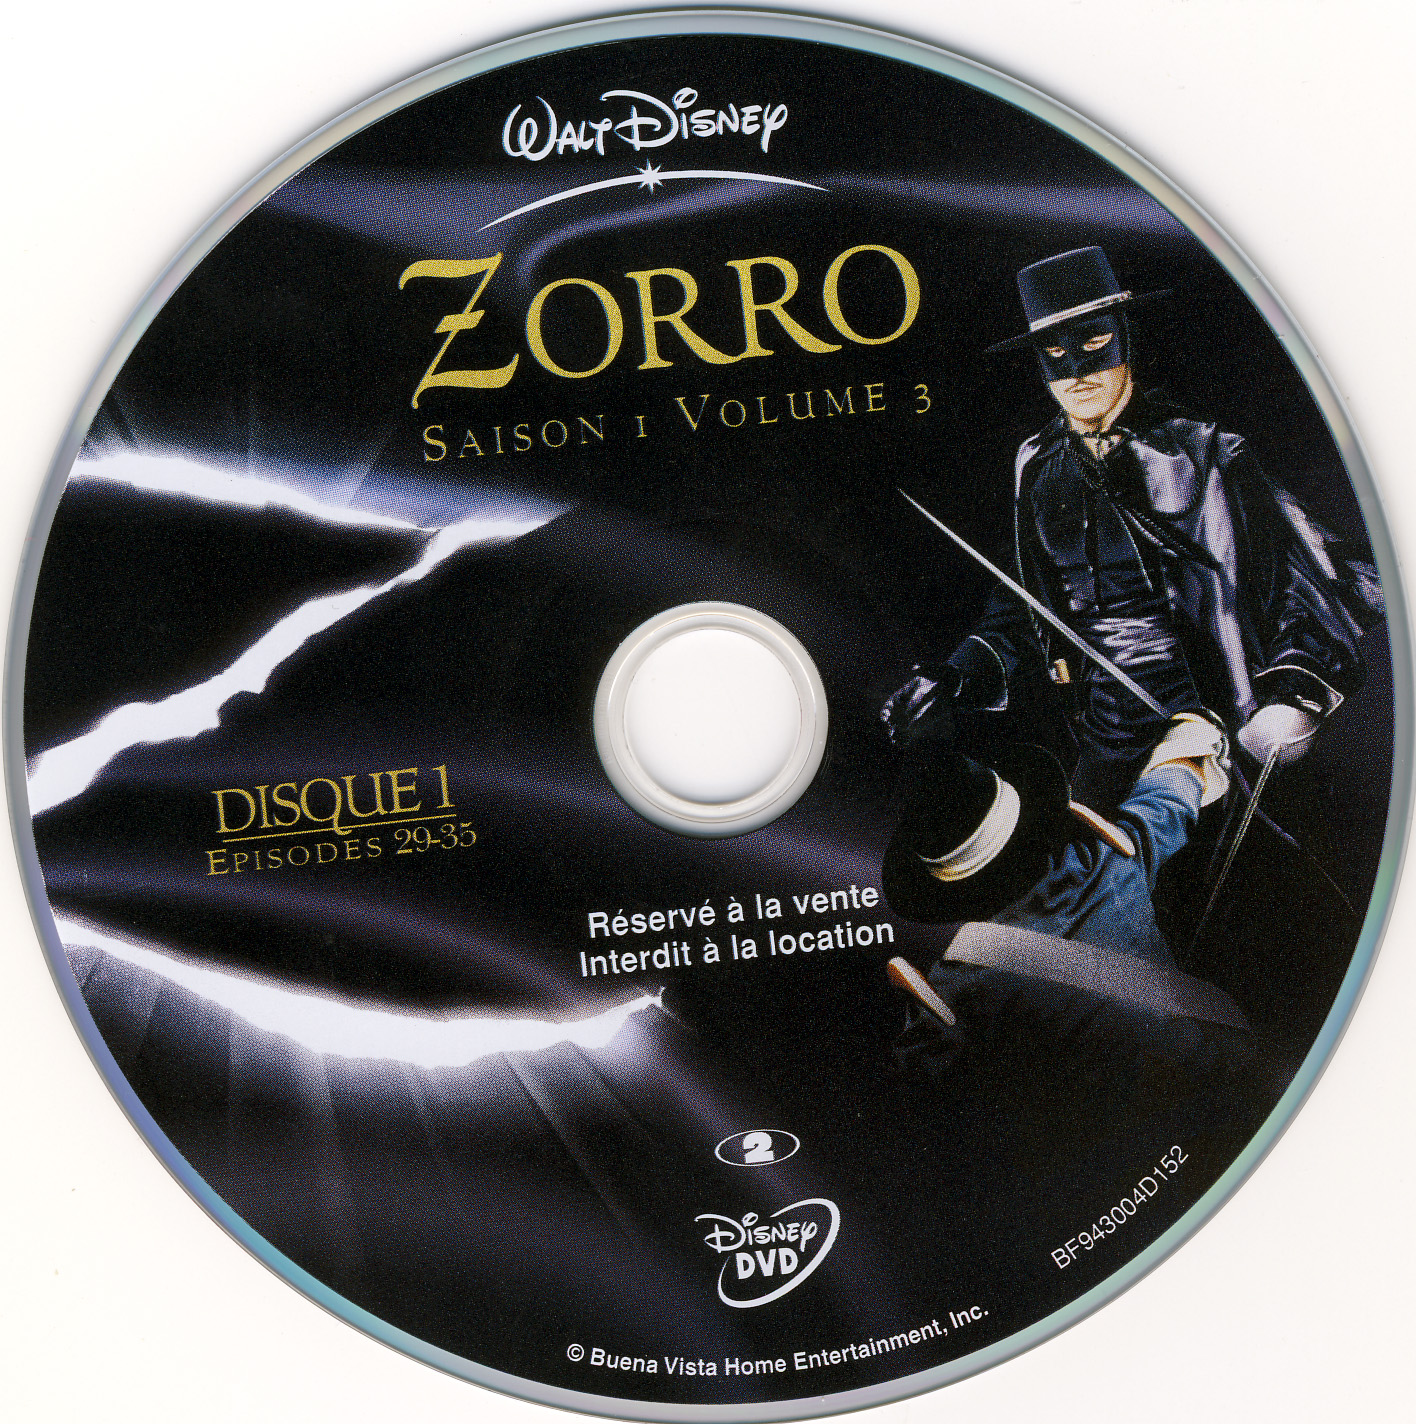 Zorro Saison 1 vol 3 DISC 1